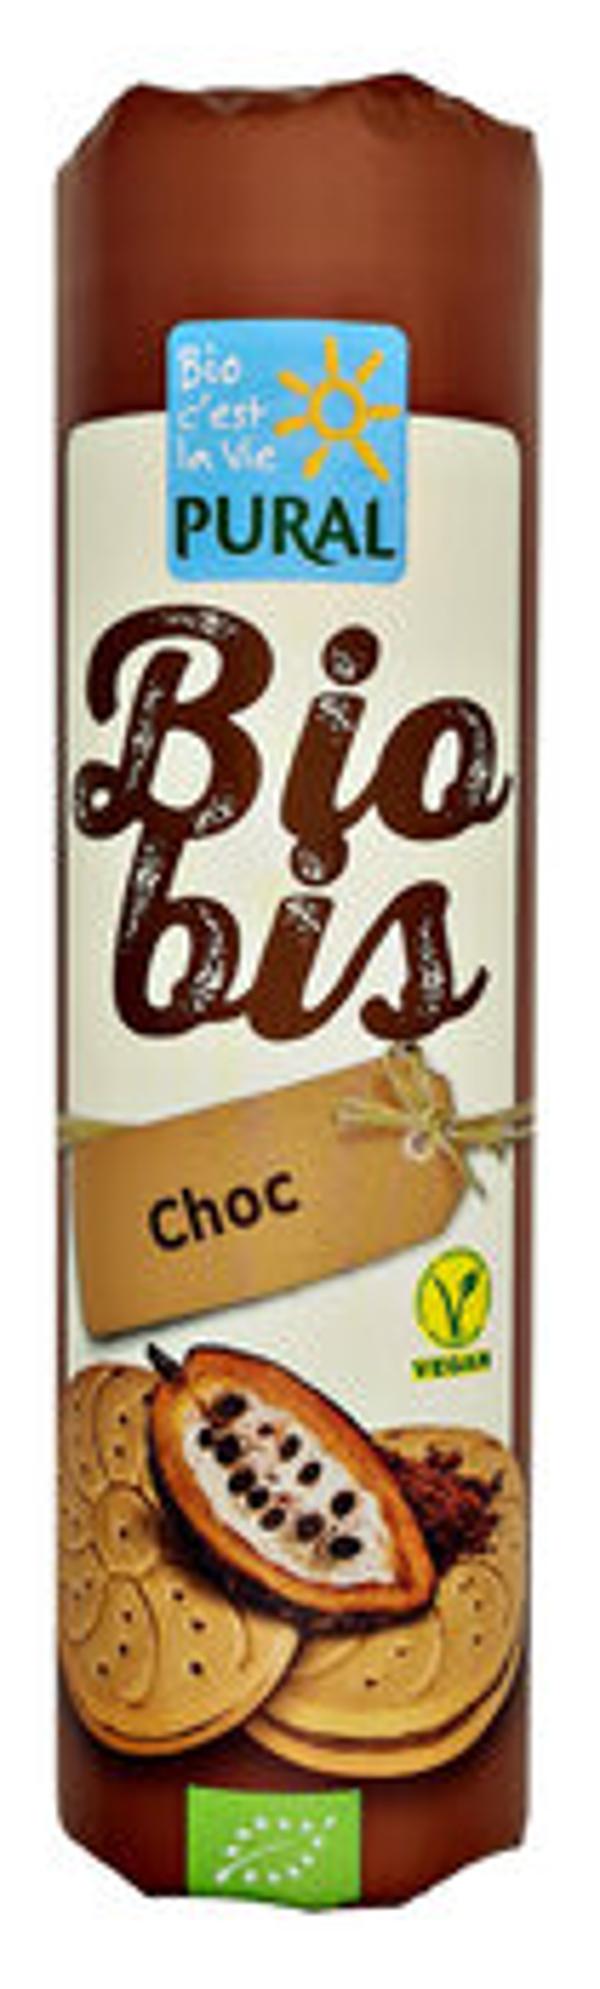 Produktfoto zu Biobis Choc Doppelkekse, 300 g